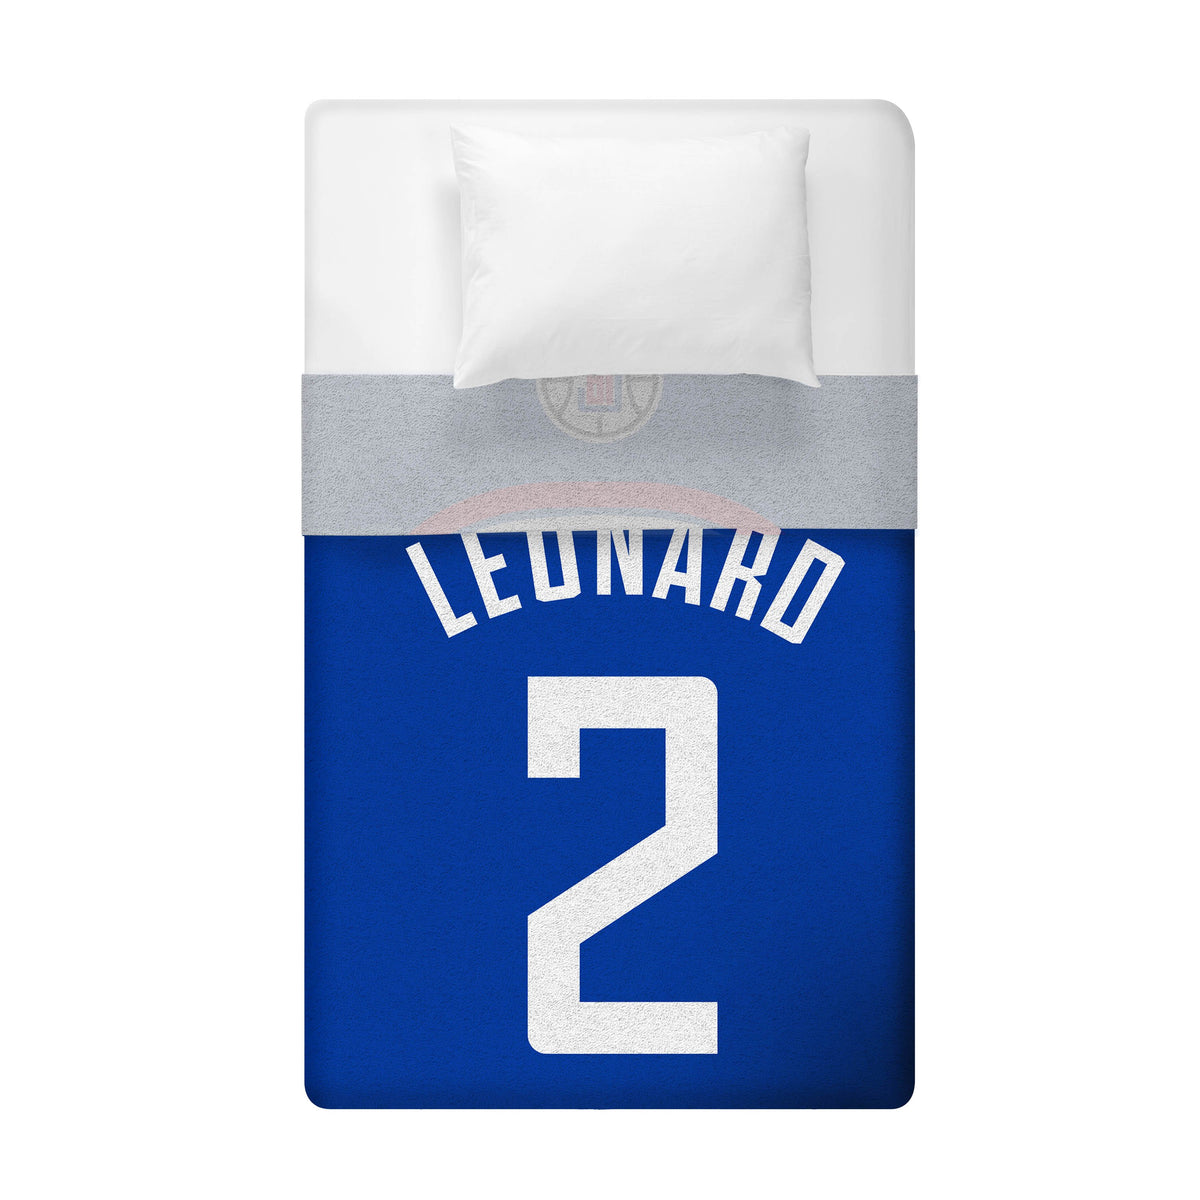 Los Angeles Clippers Kawhi Leonard Sleep Squad Blanket X Bleacher Creatures Bundle